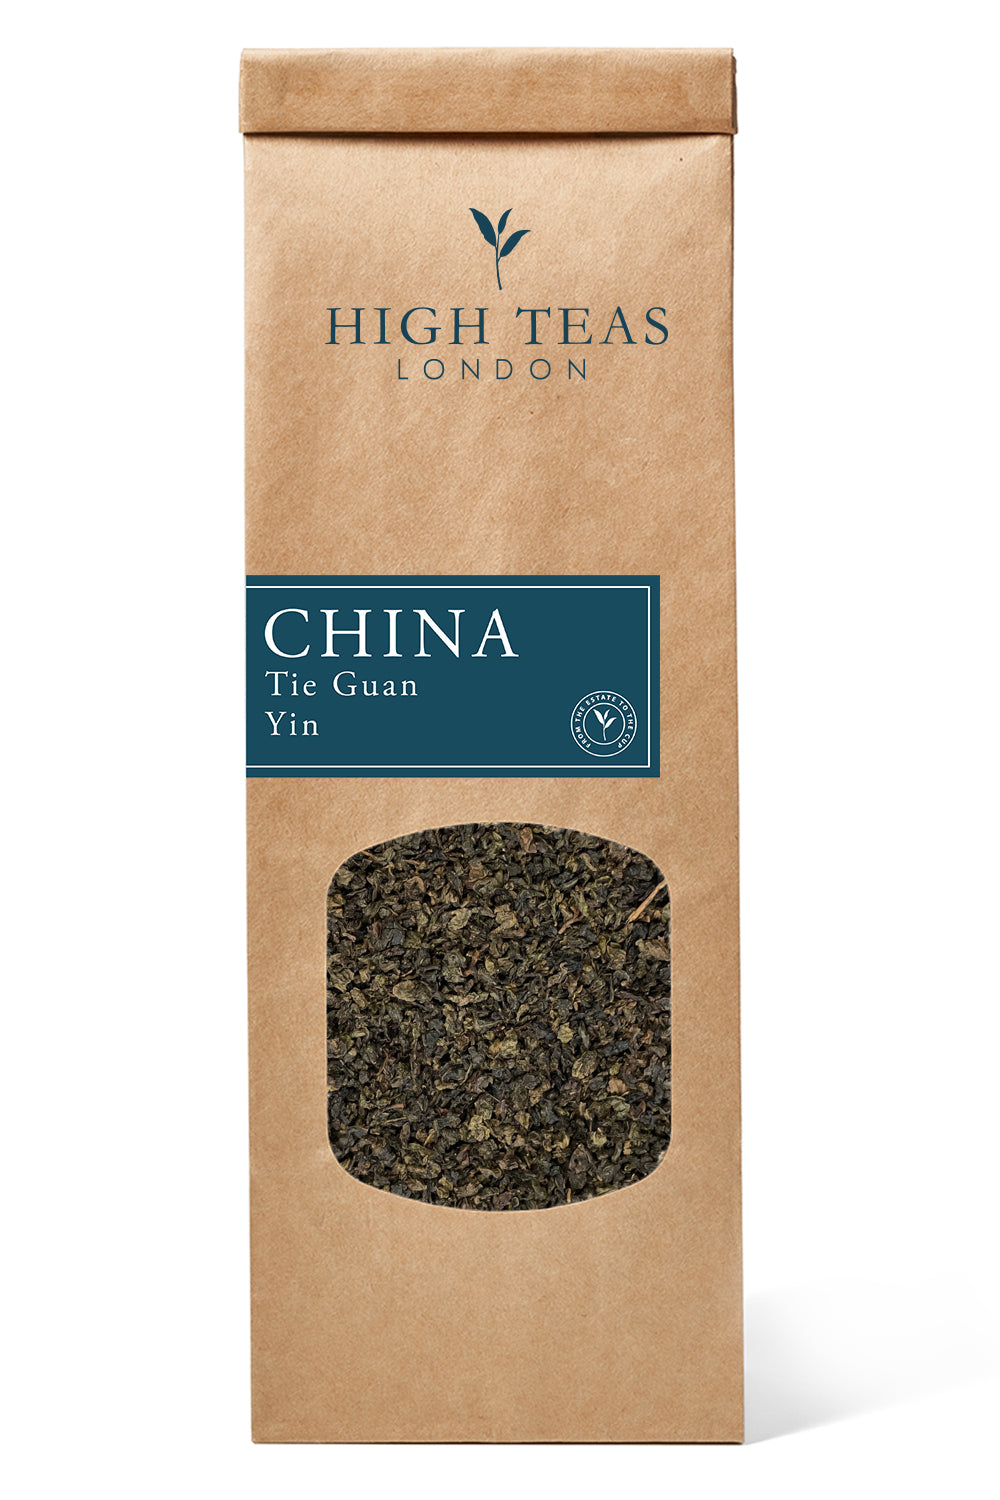 China - Tie Guan Yin Iron Buddha-50g-Loose Leaf Tea-High Teas